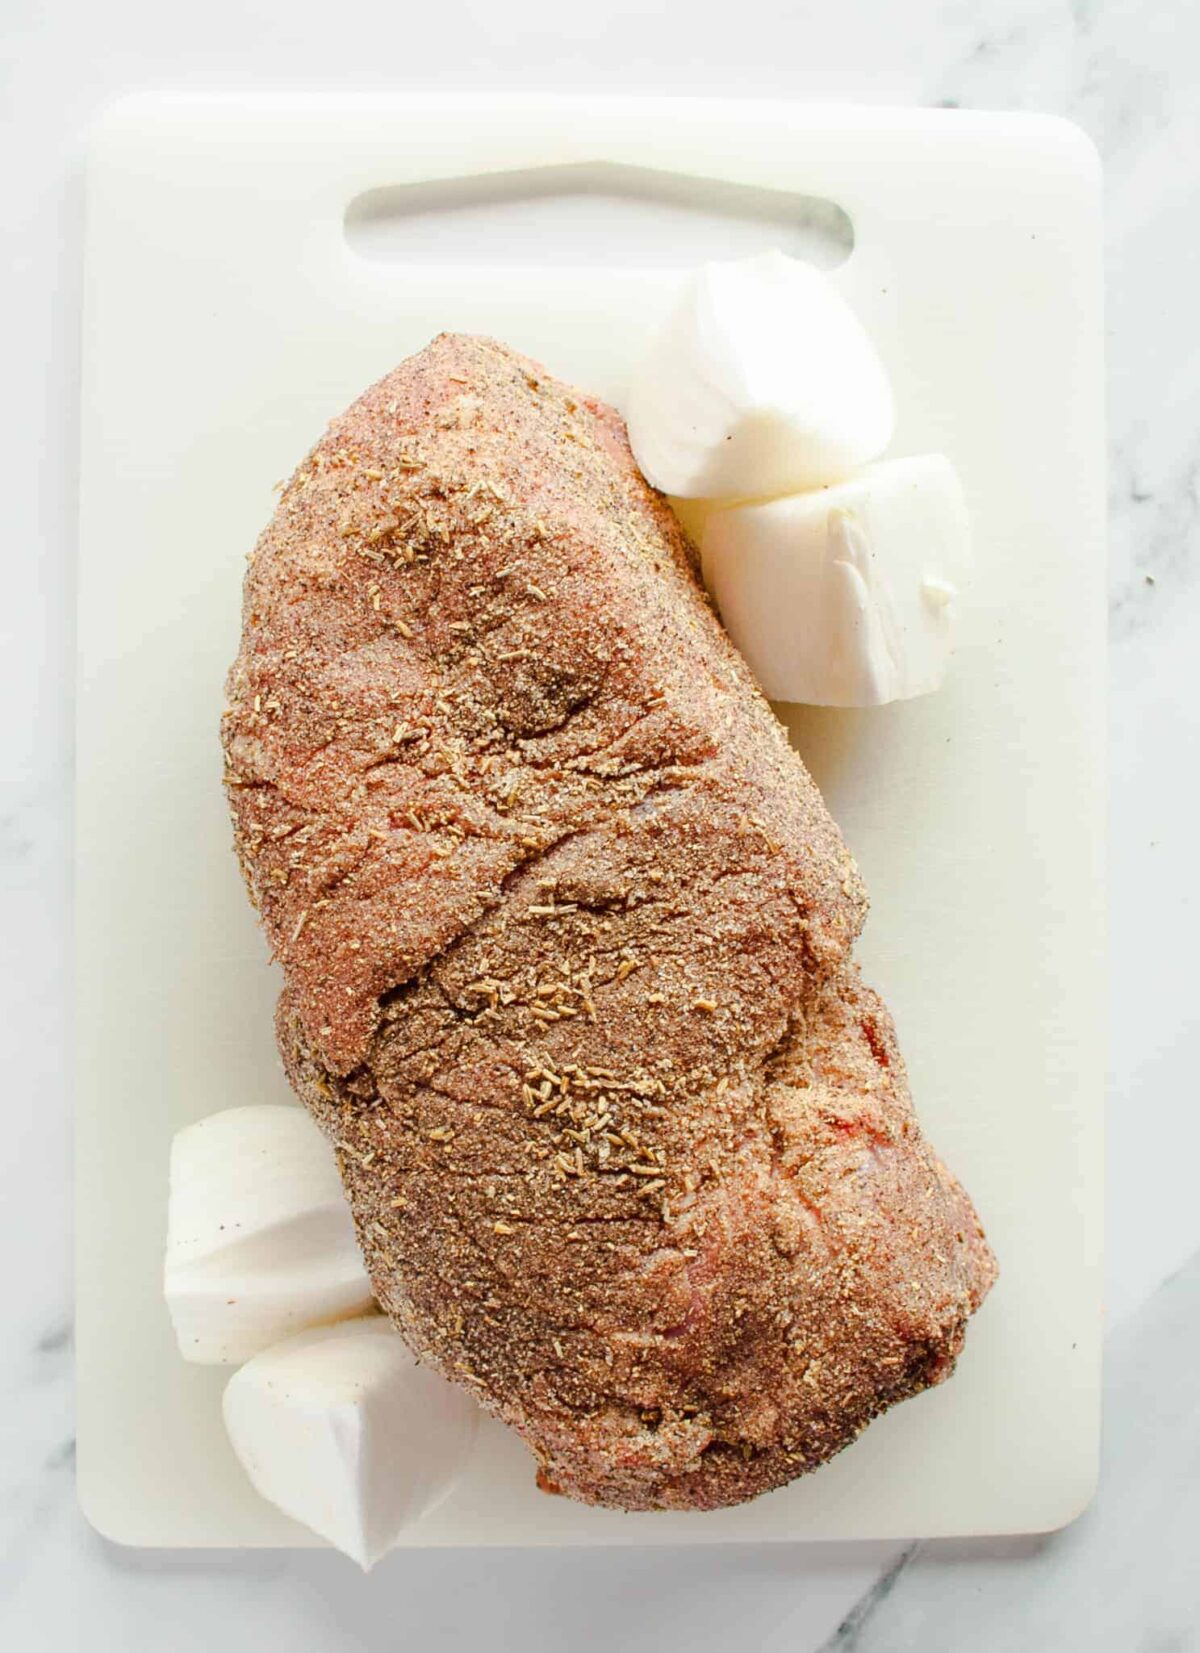 Seasoned pork roast on cutting board with quartered onion